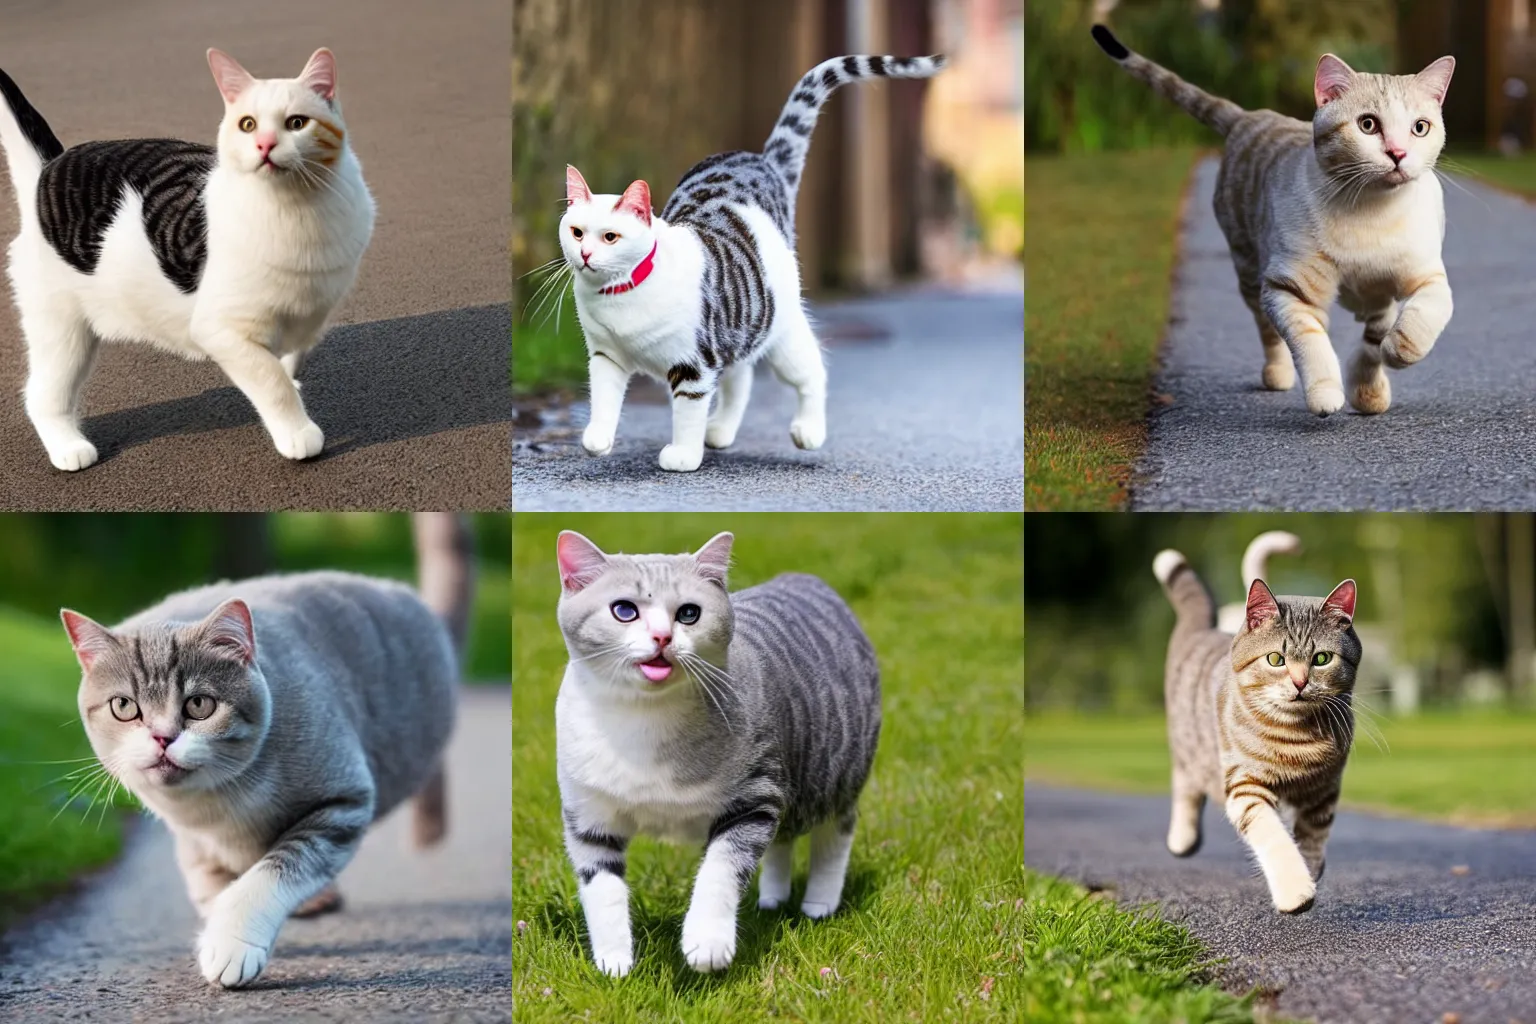 Prompt: British short hair cat walking towards a labrador